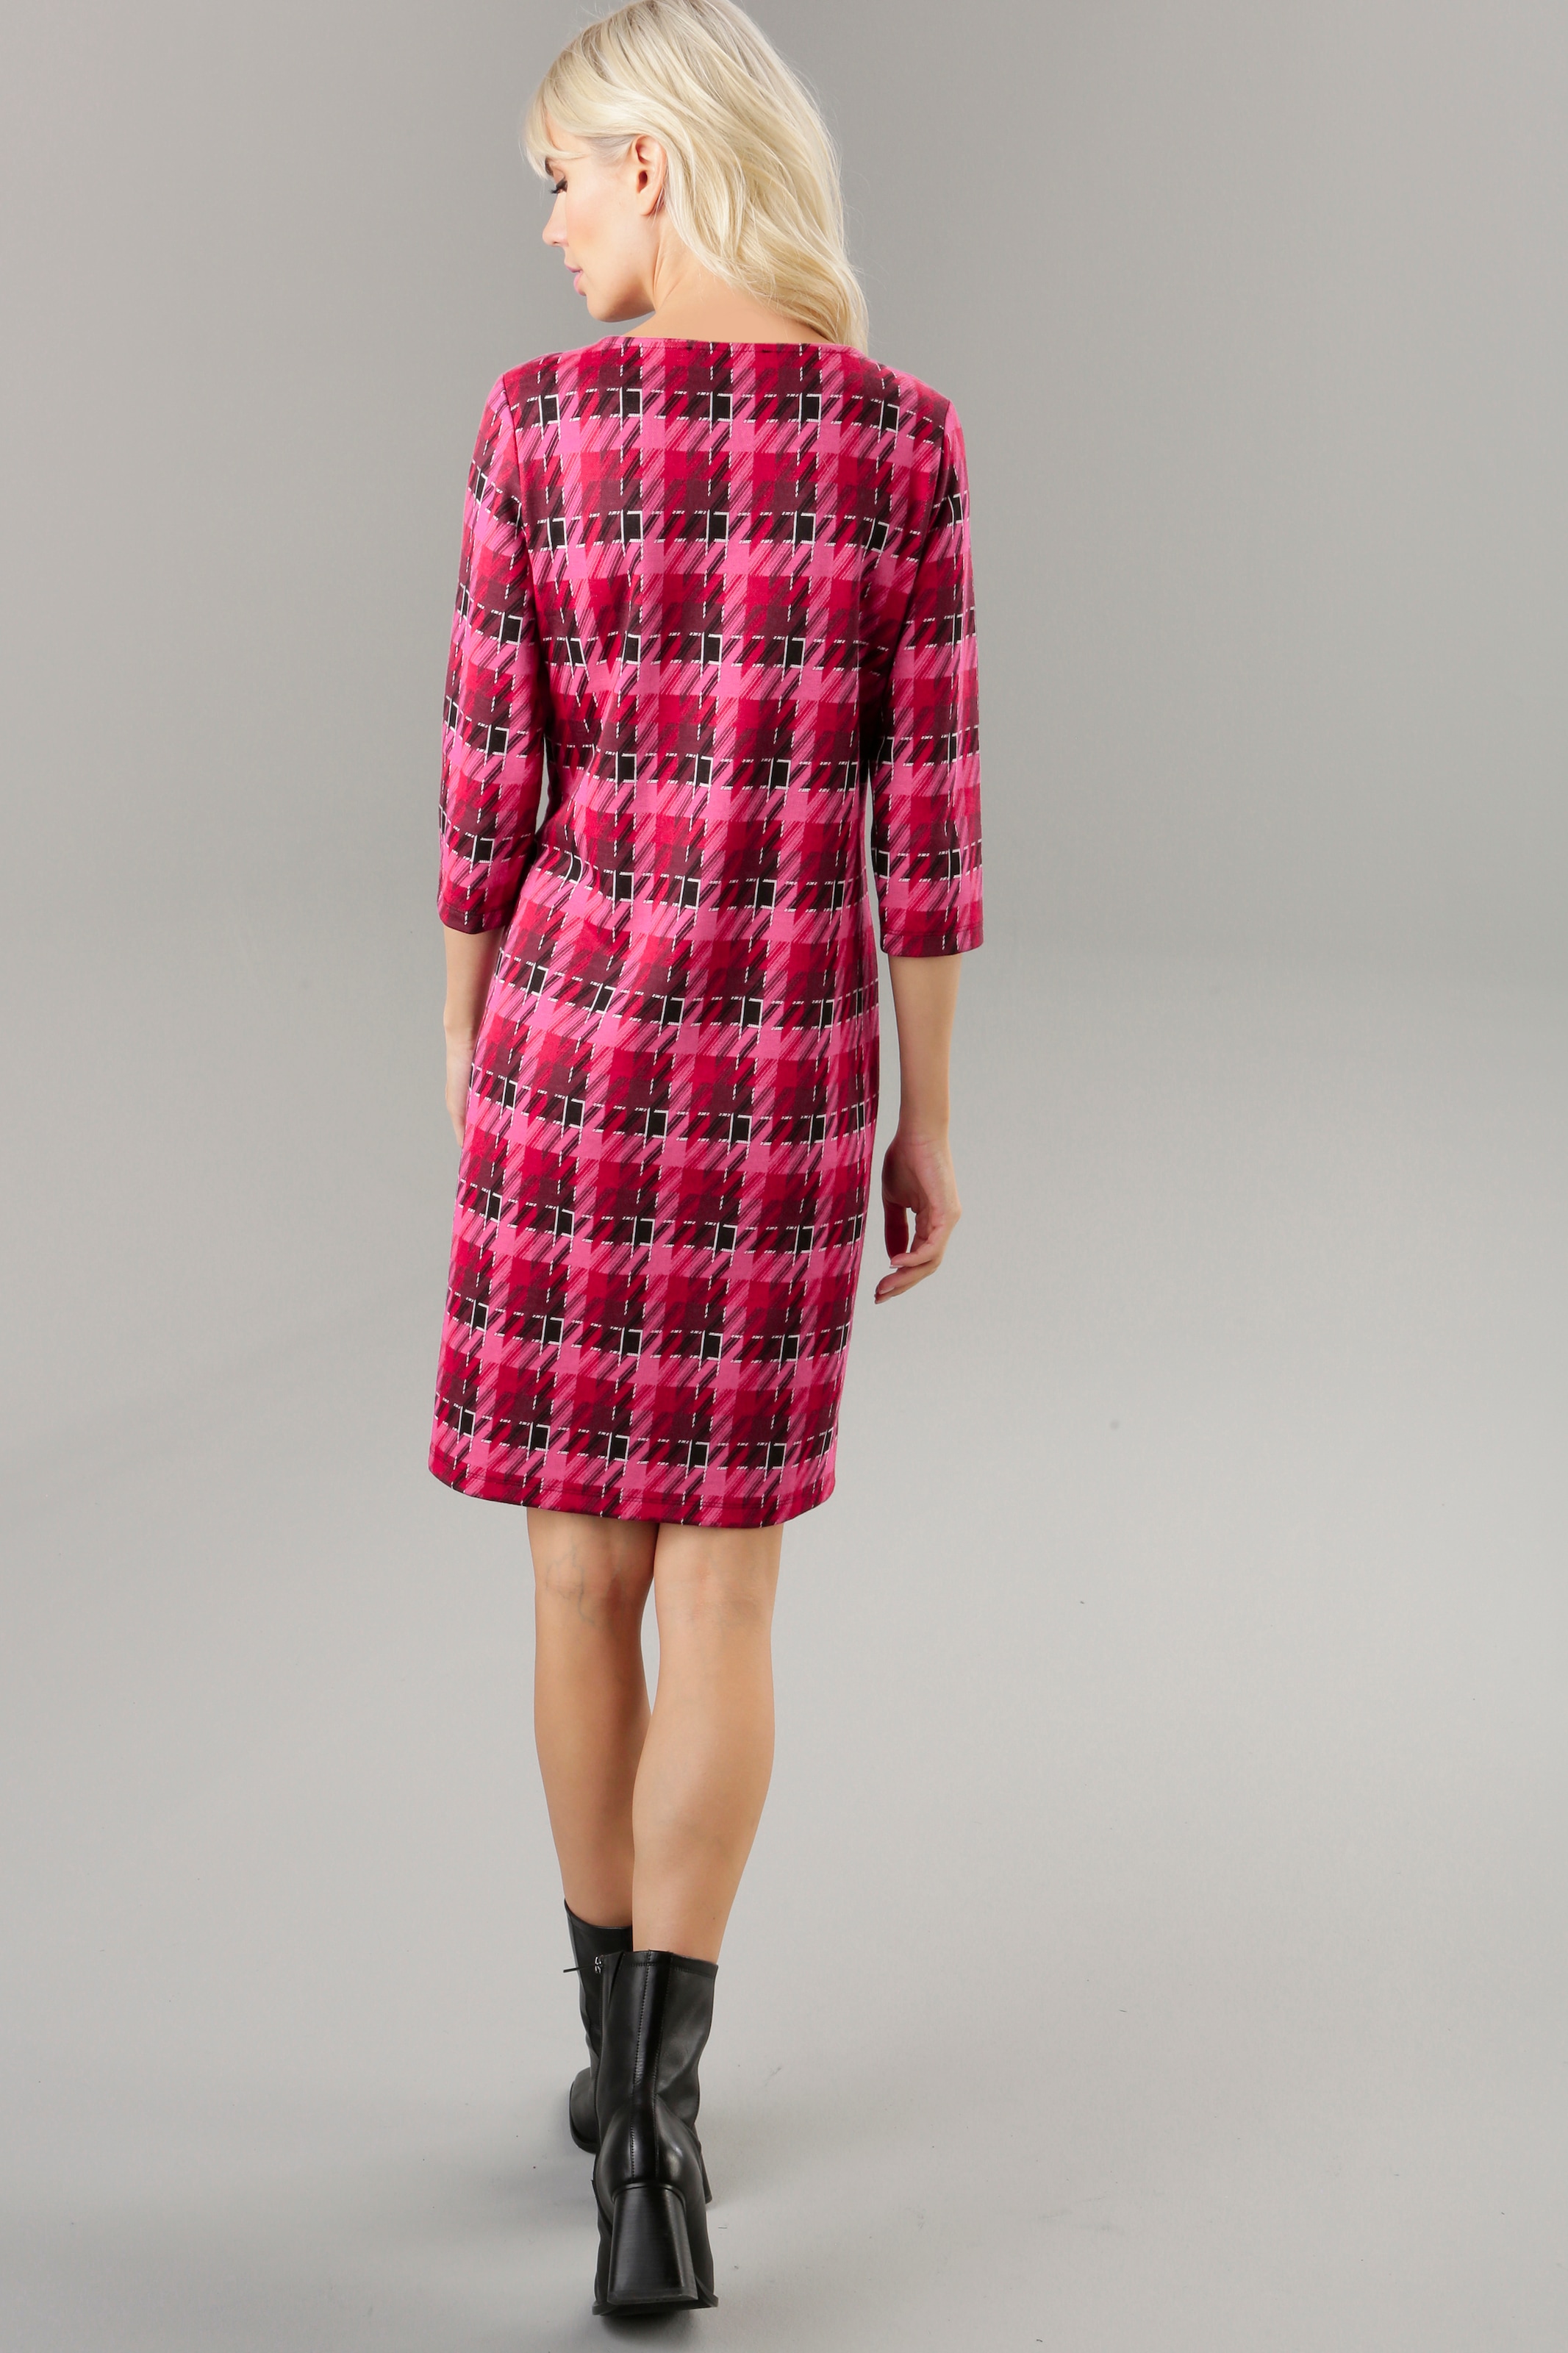 Aniston SELECTED Jerseykleid, mit trendy Allover-Muster in Knallfarben  bestellen online bei OTTO